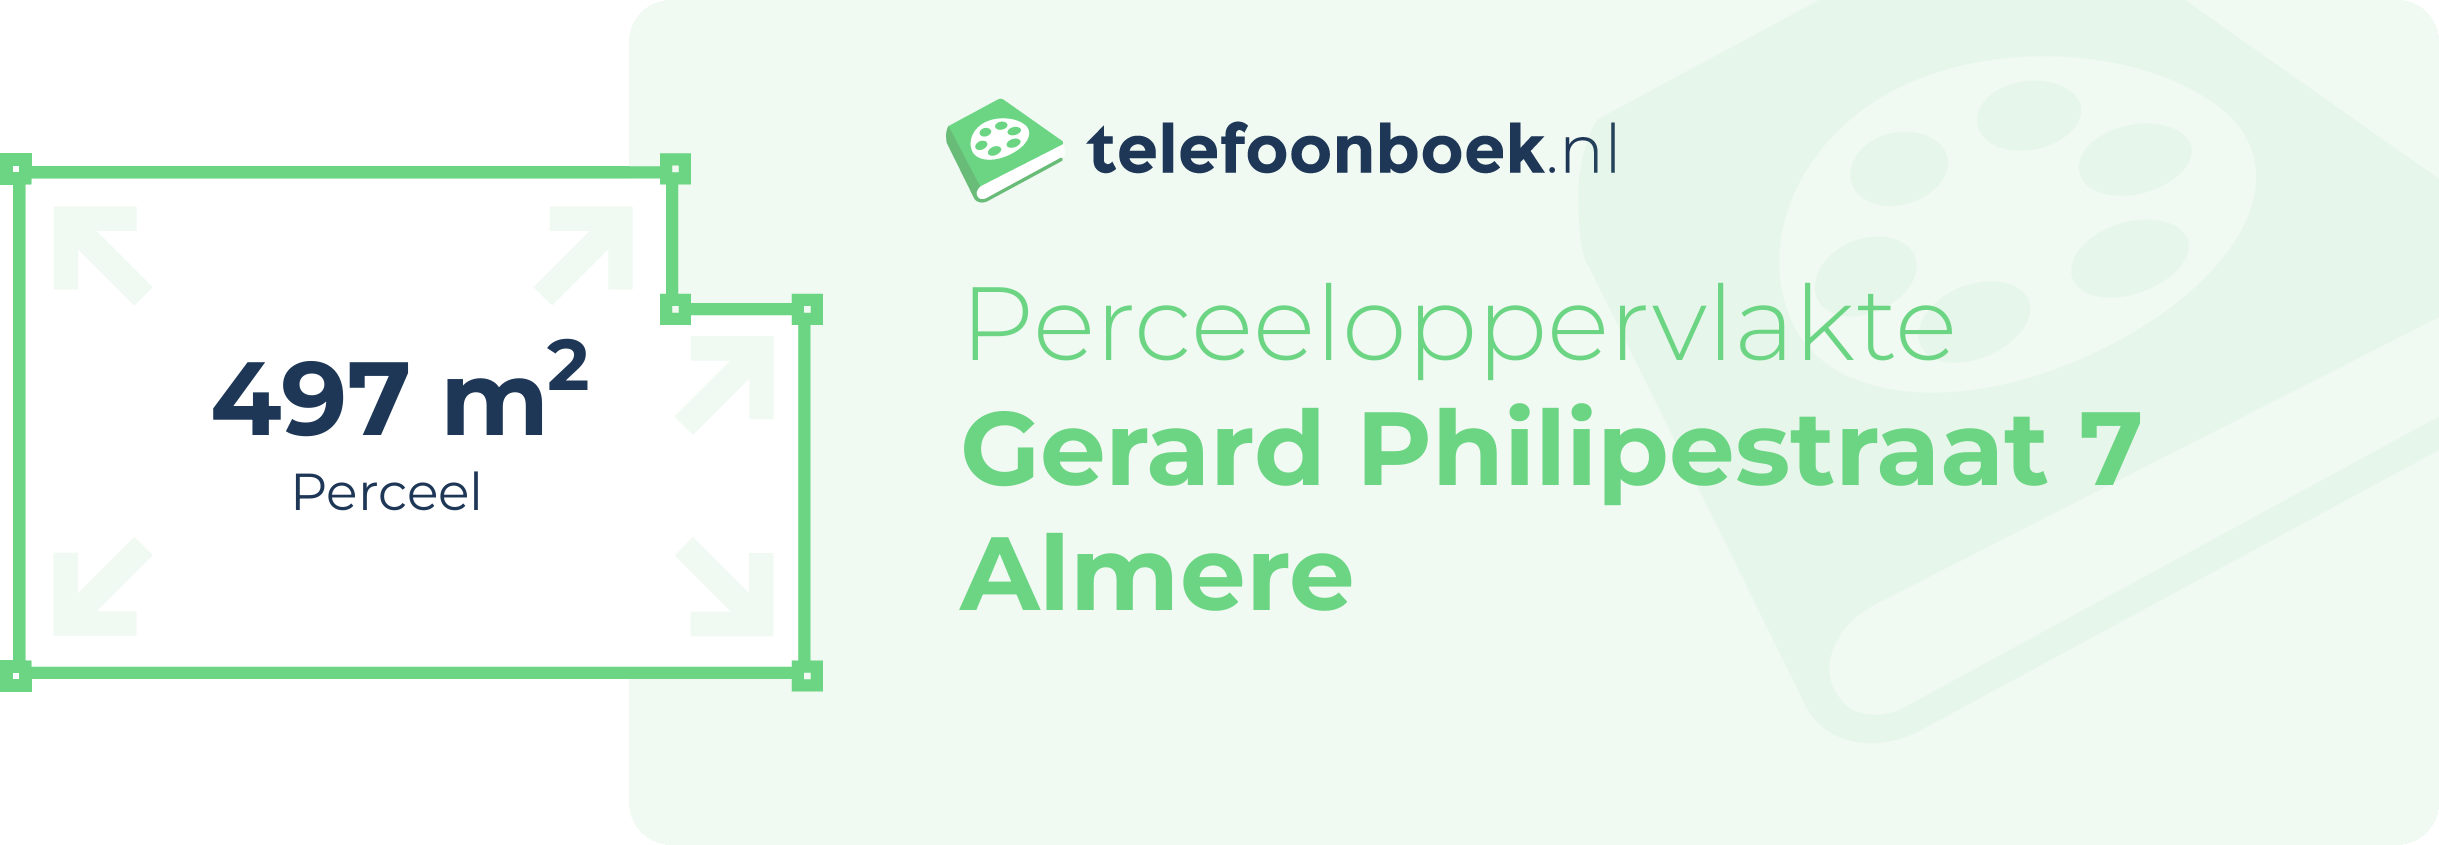 Perceeloppervlakte Gerard Philipestraat 7 Almere